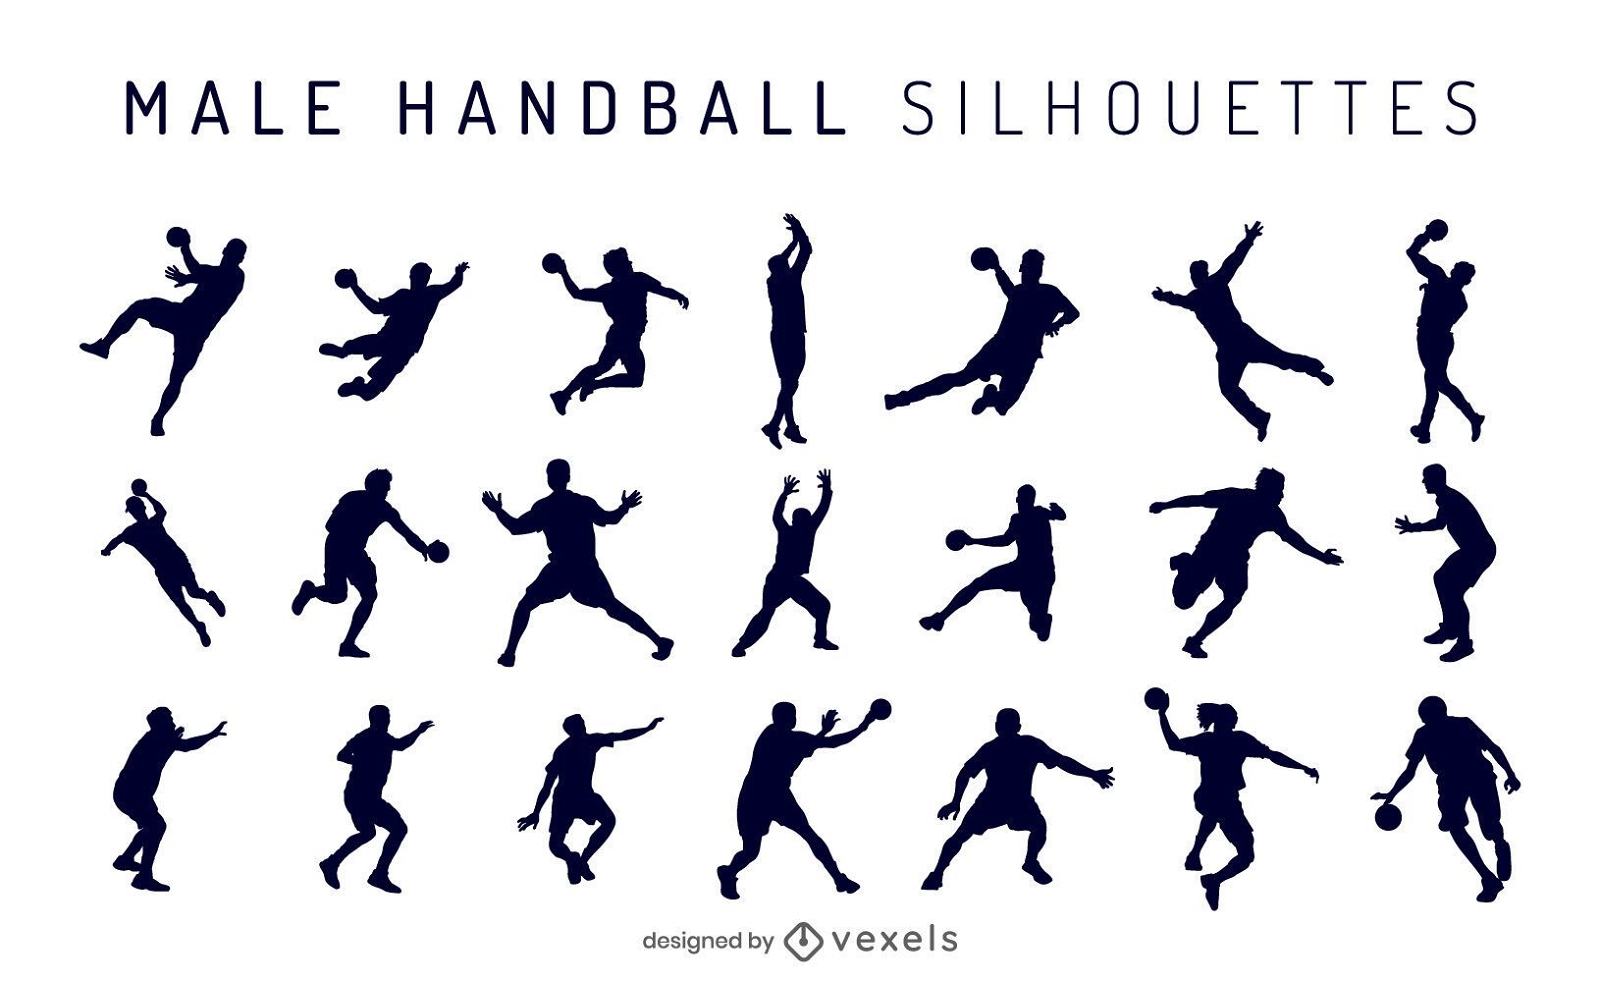 M?nnliche Handball Silhouette Pack